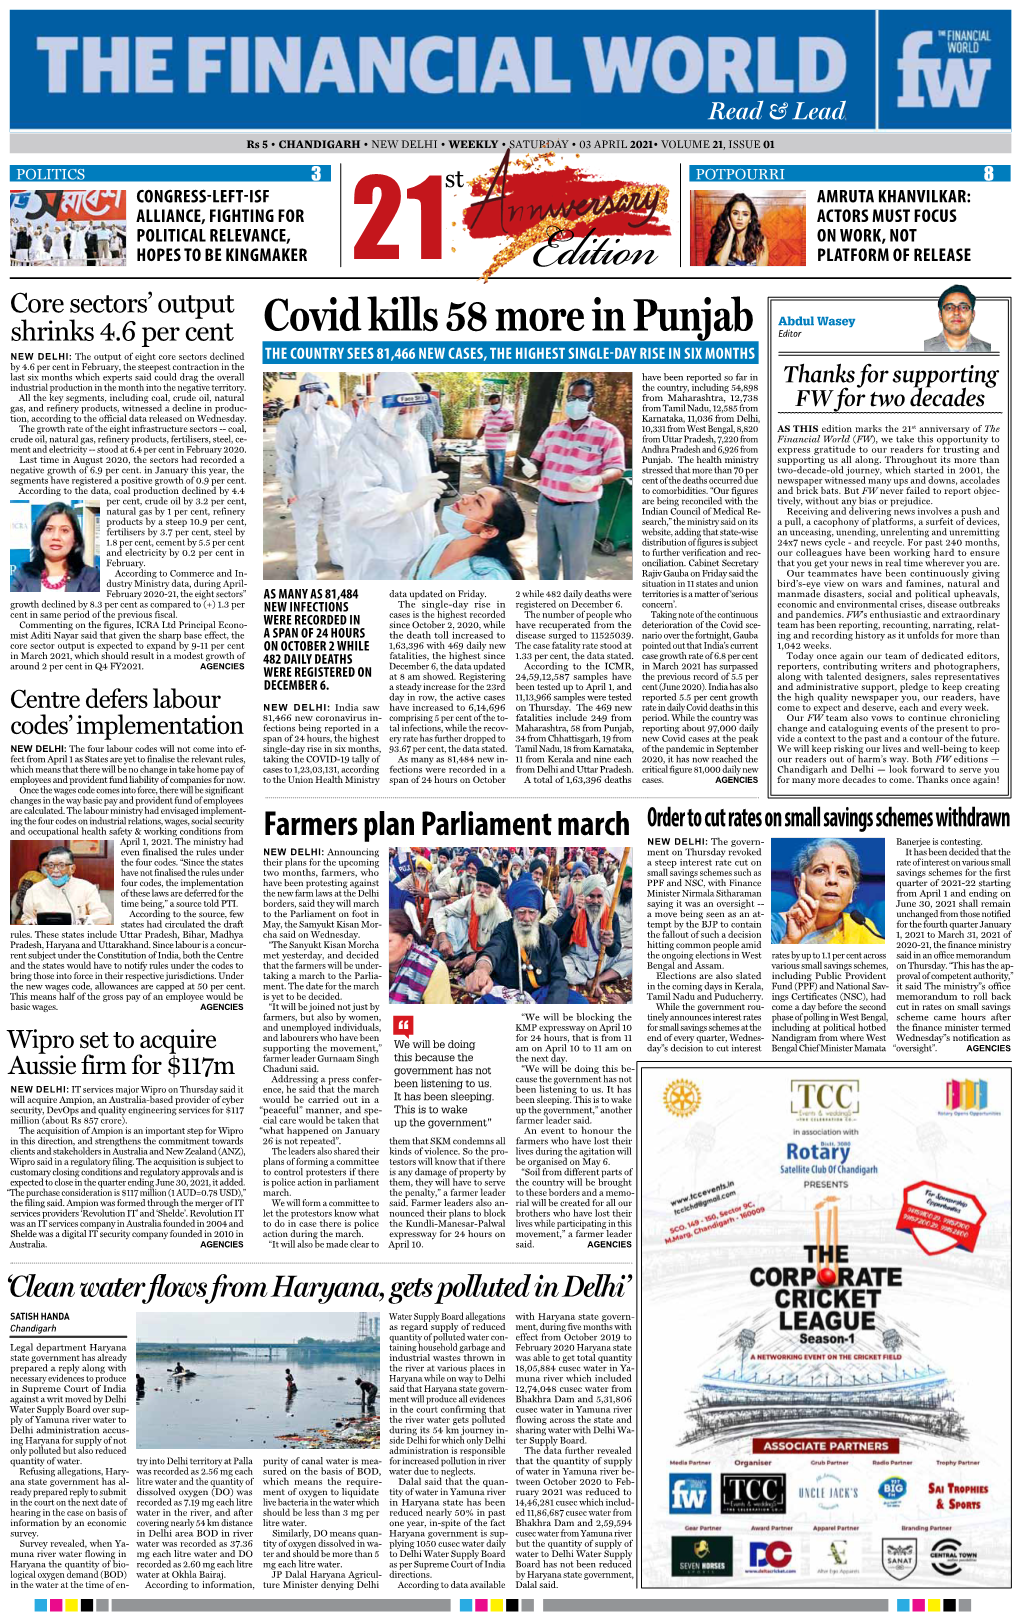 Covid Kills 58 More in Punjab